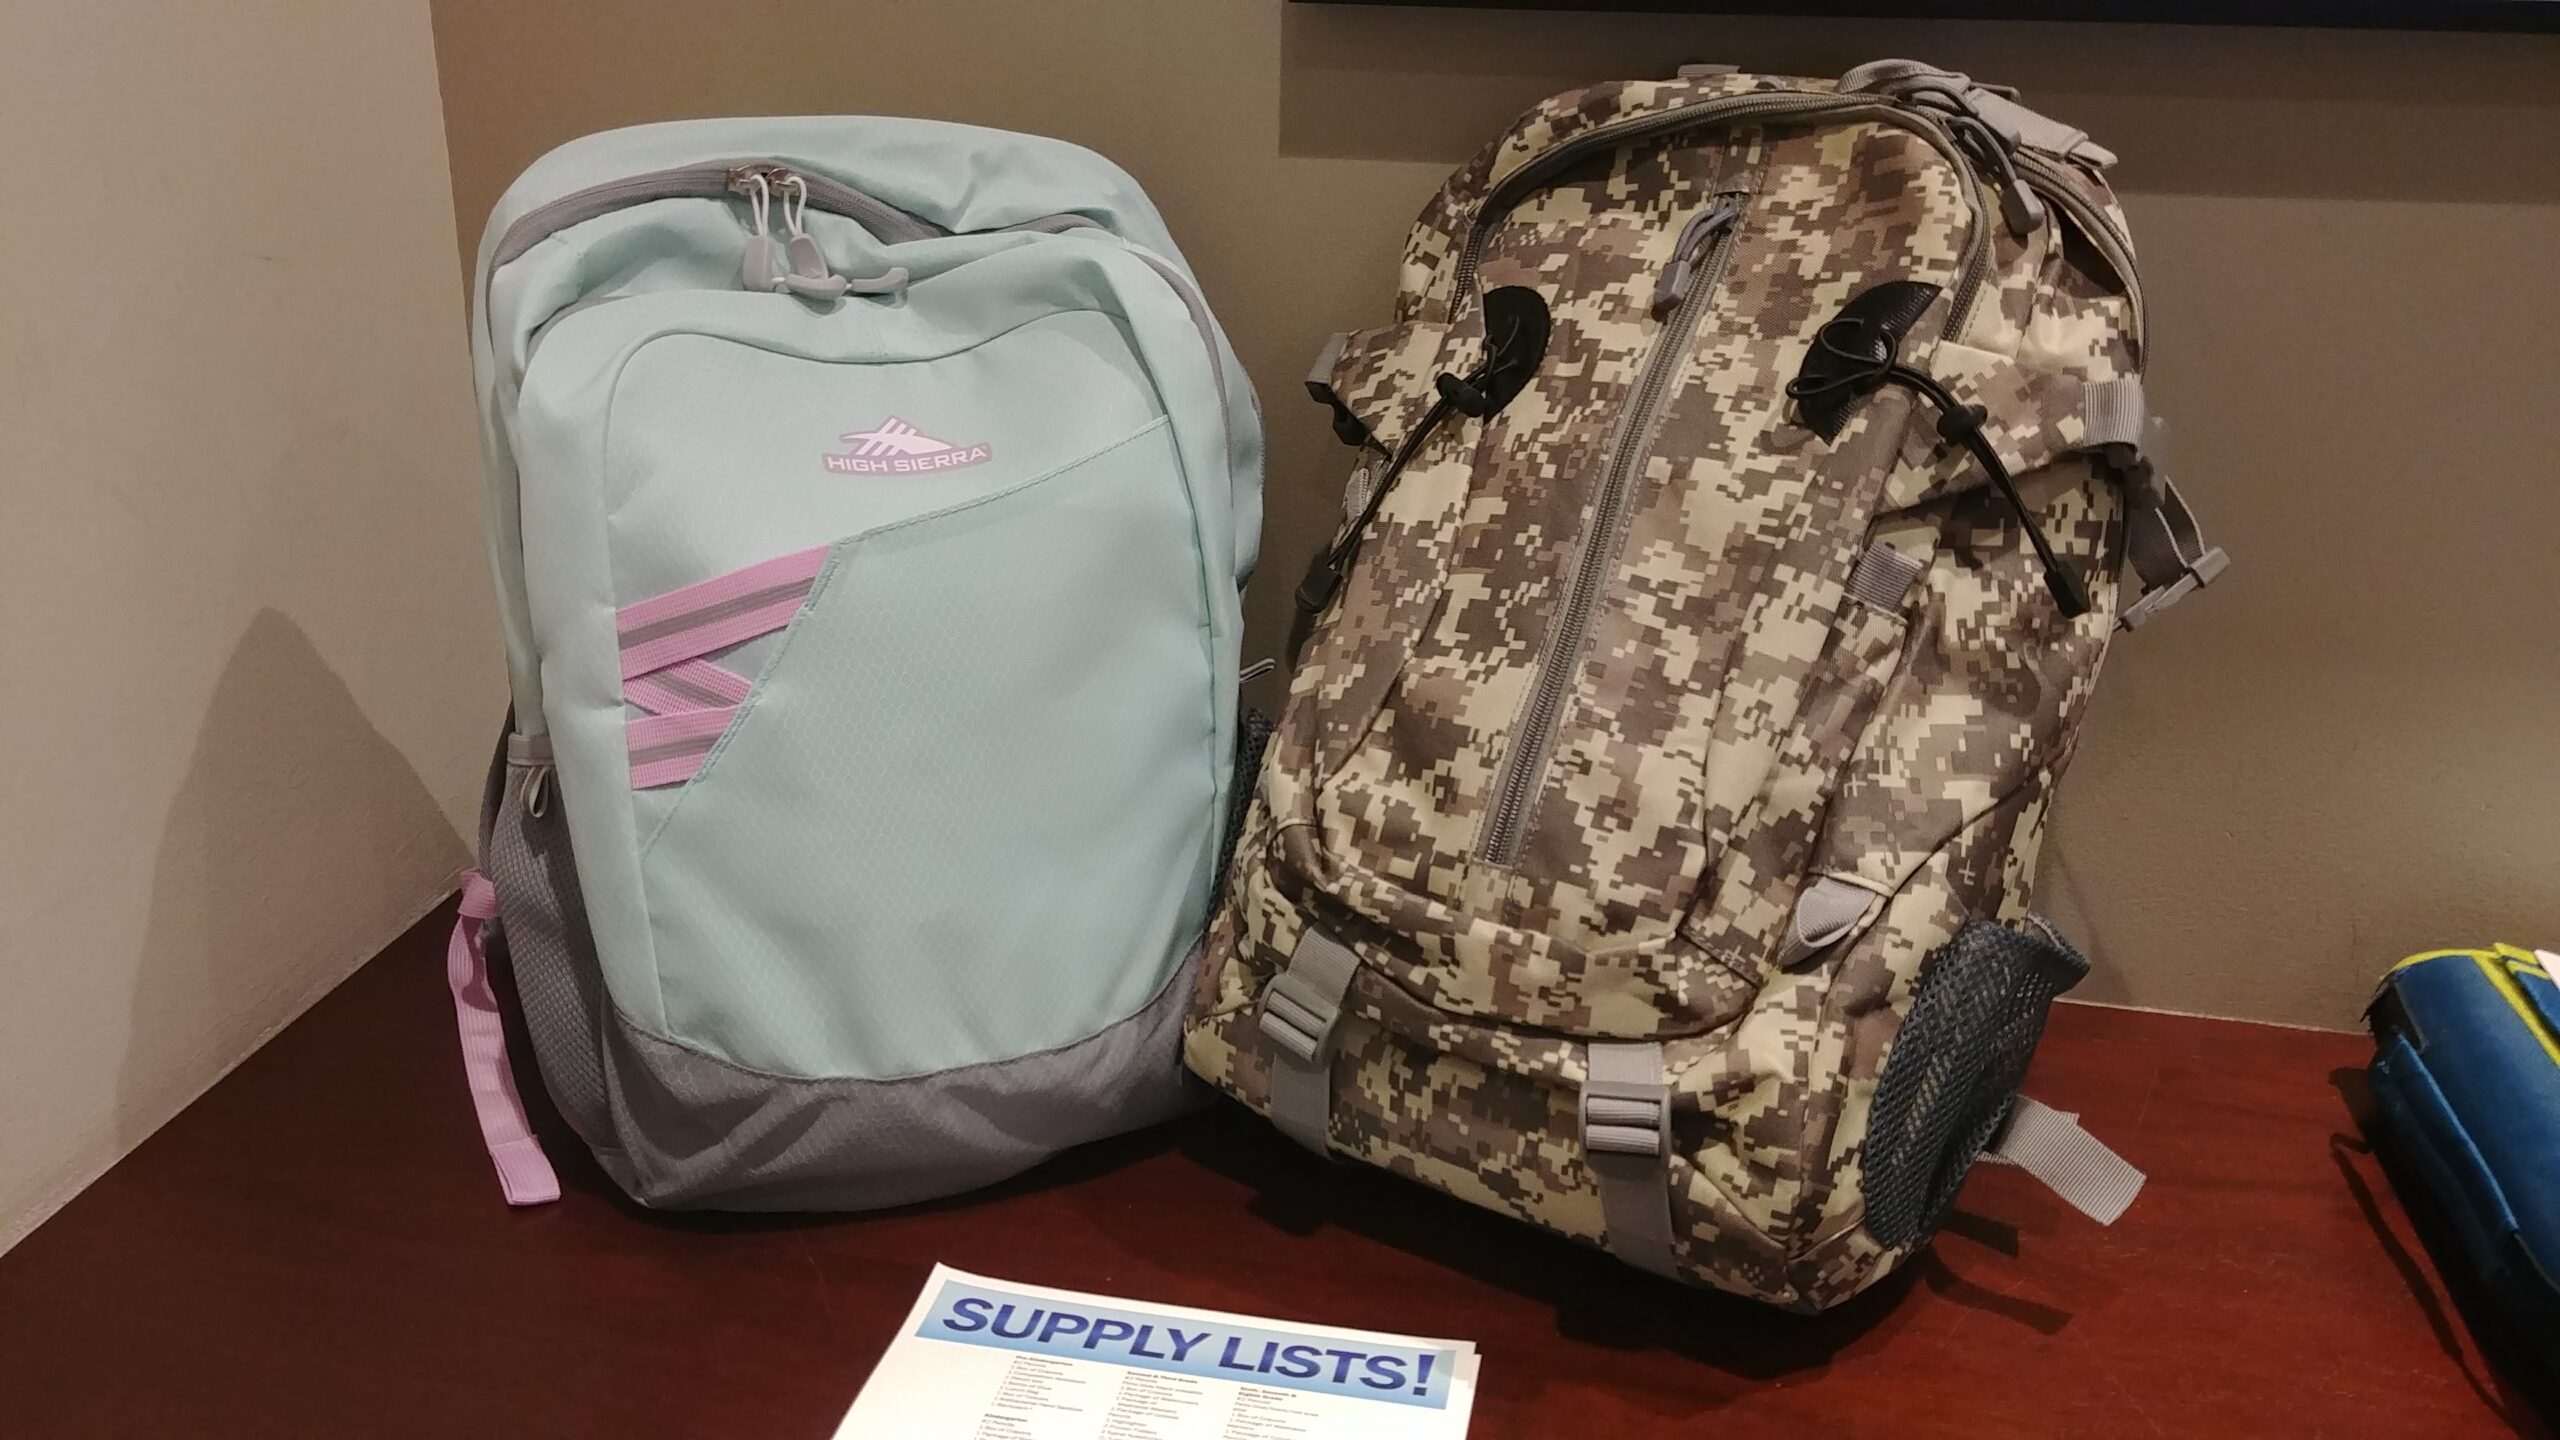 Giving Back – Operation Backpack